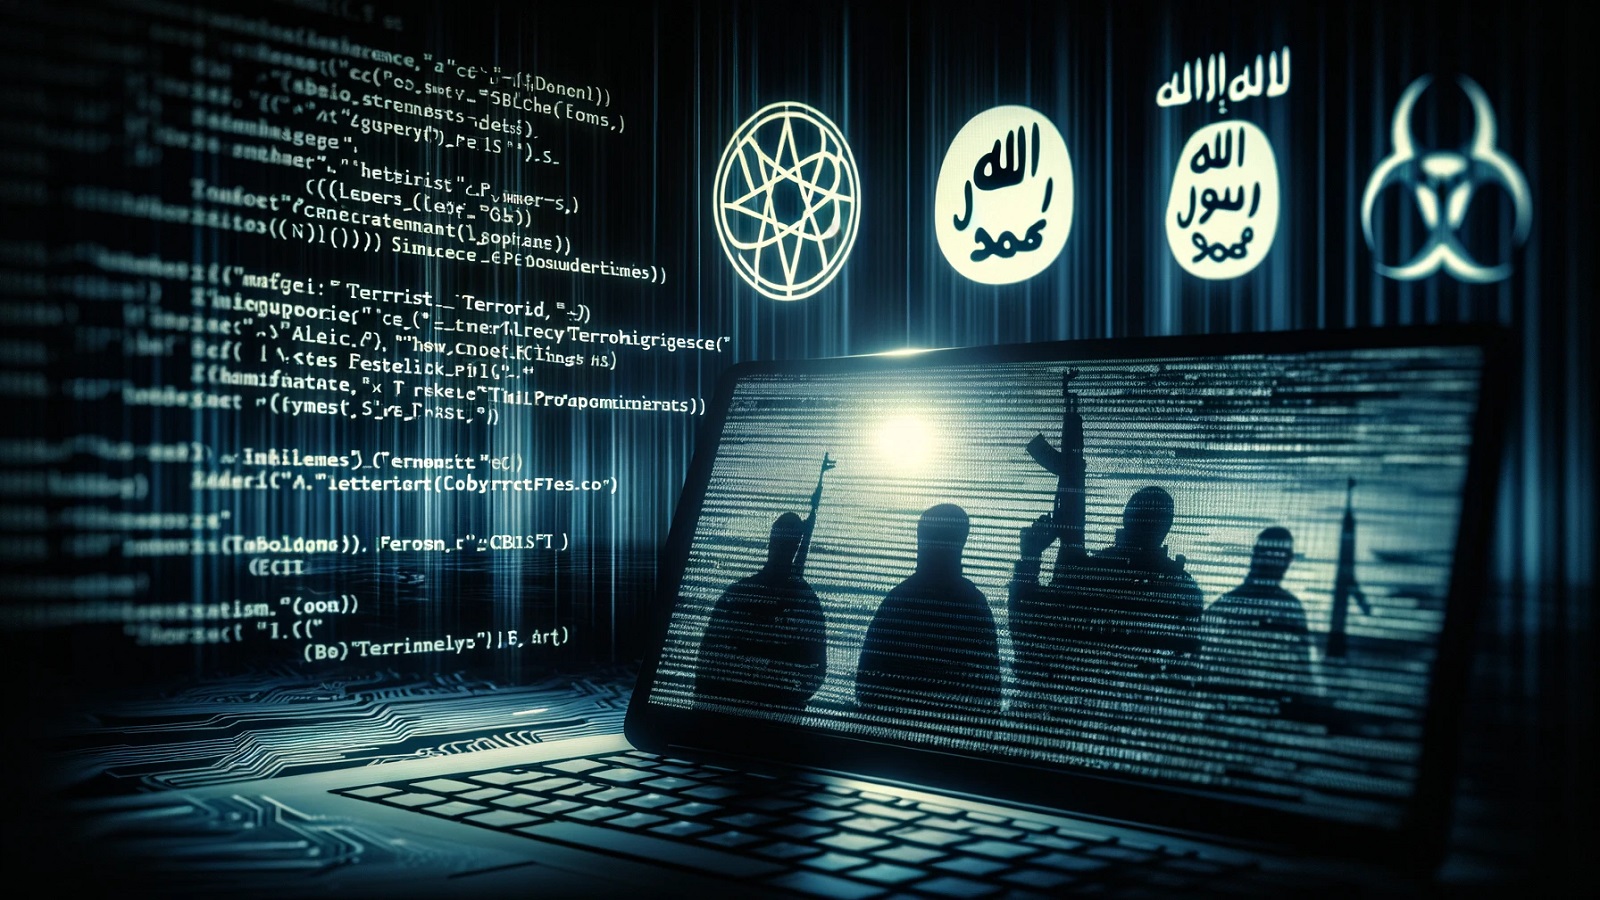 AI Tested as a Funding Platform for Terrorist Agenda